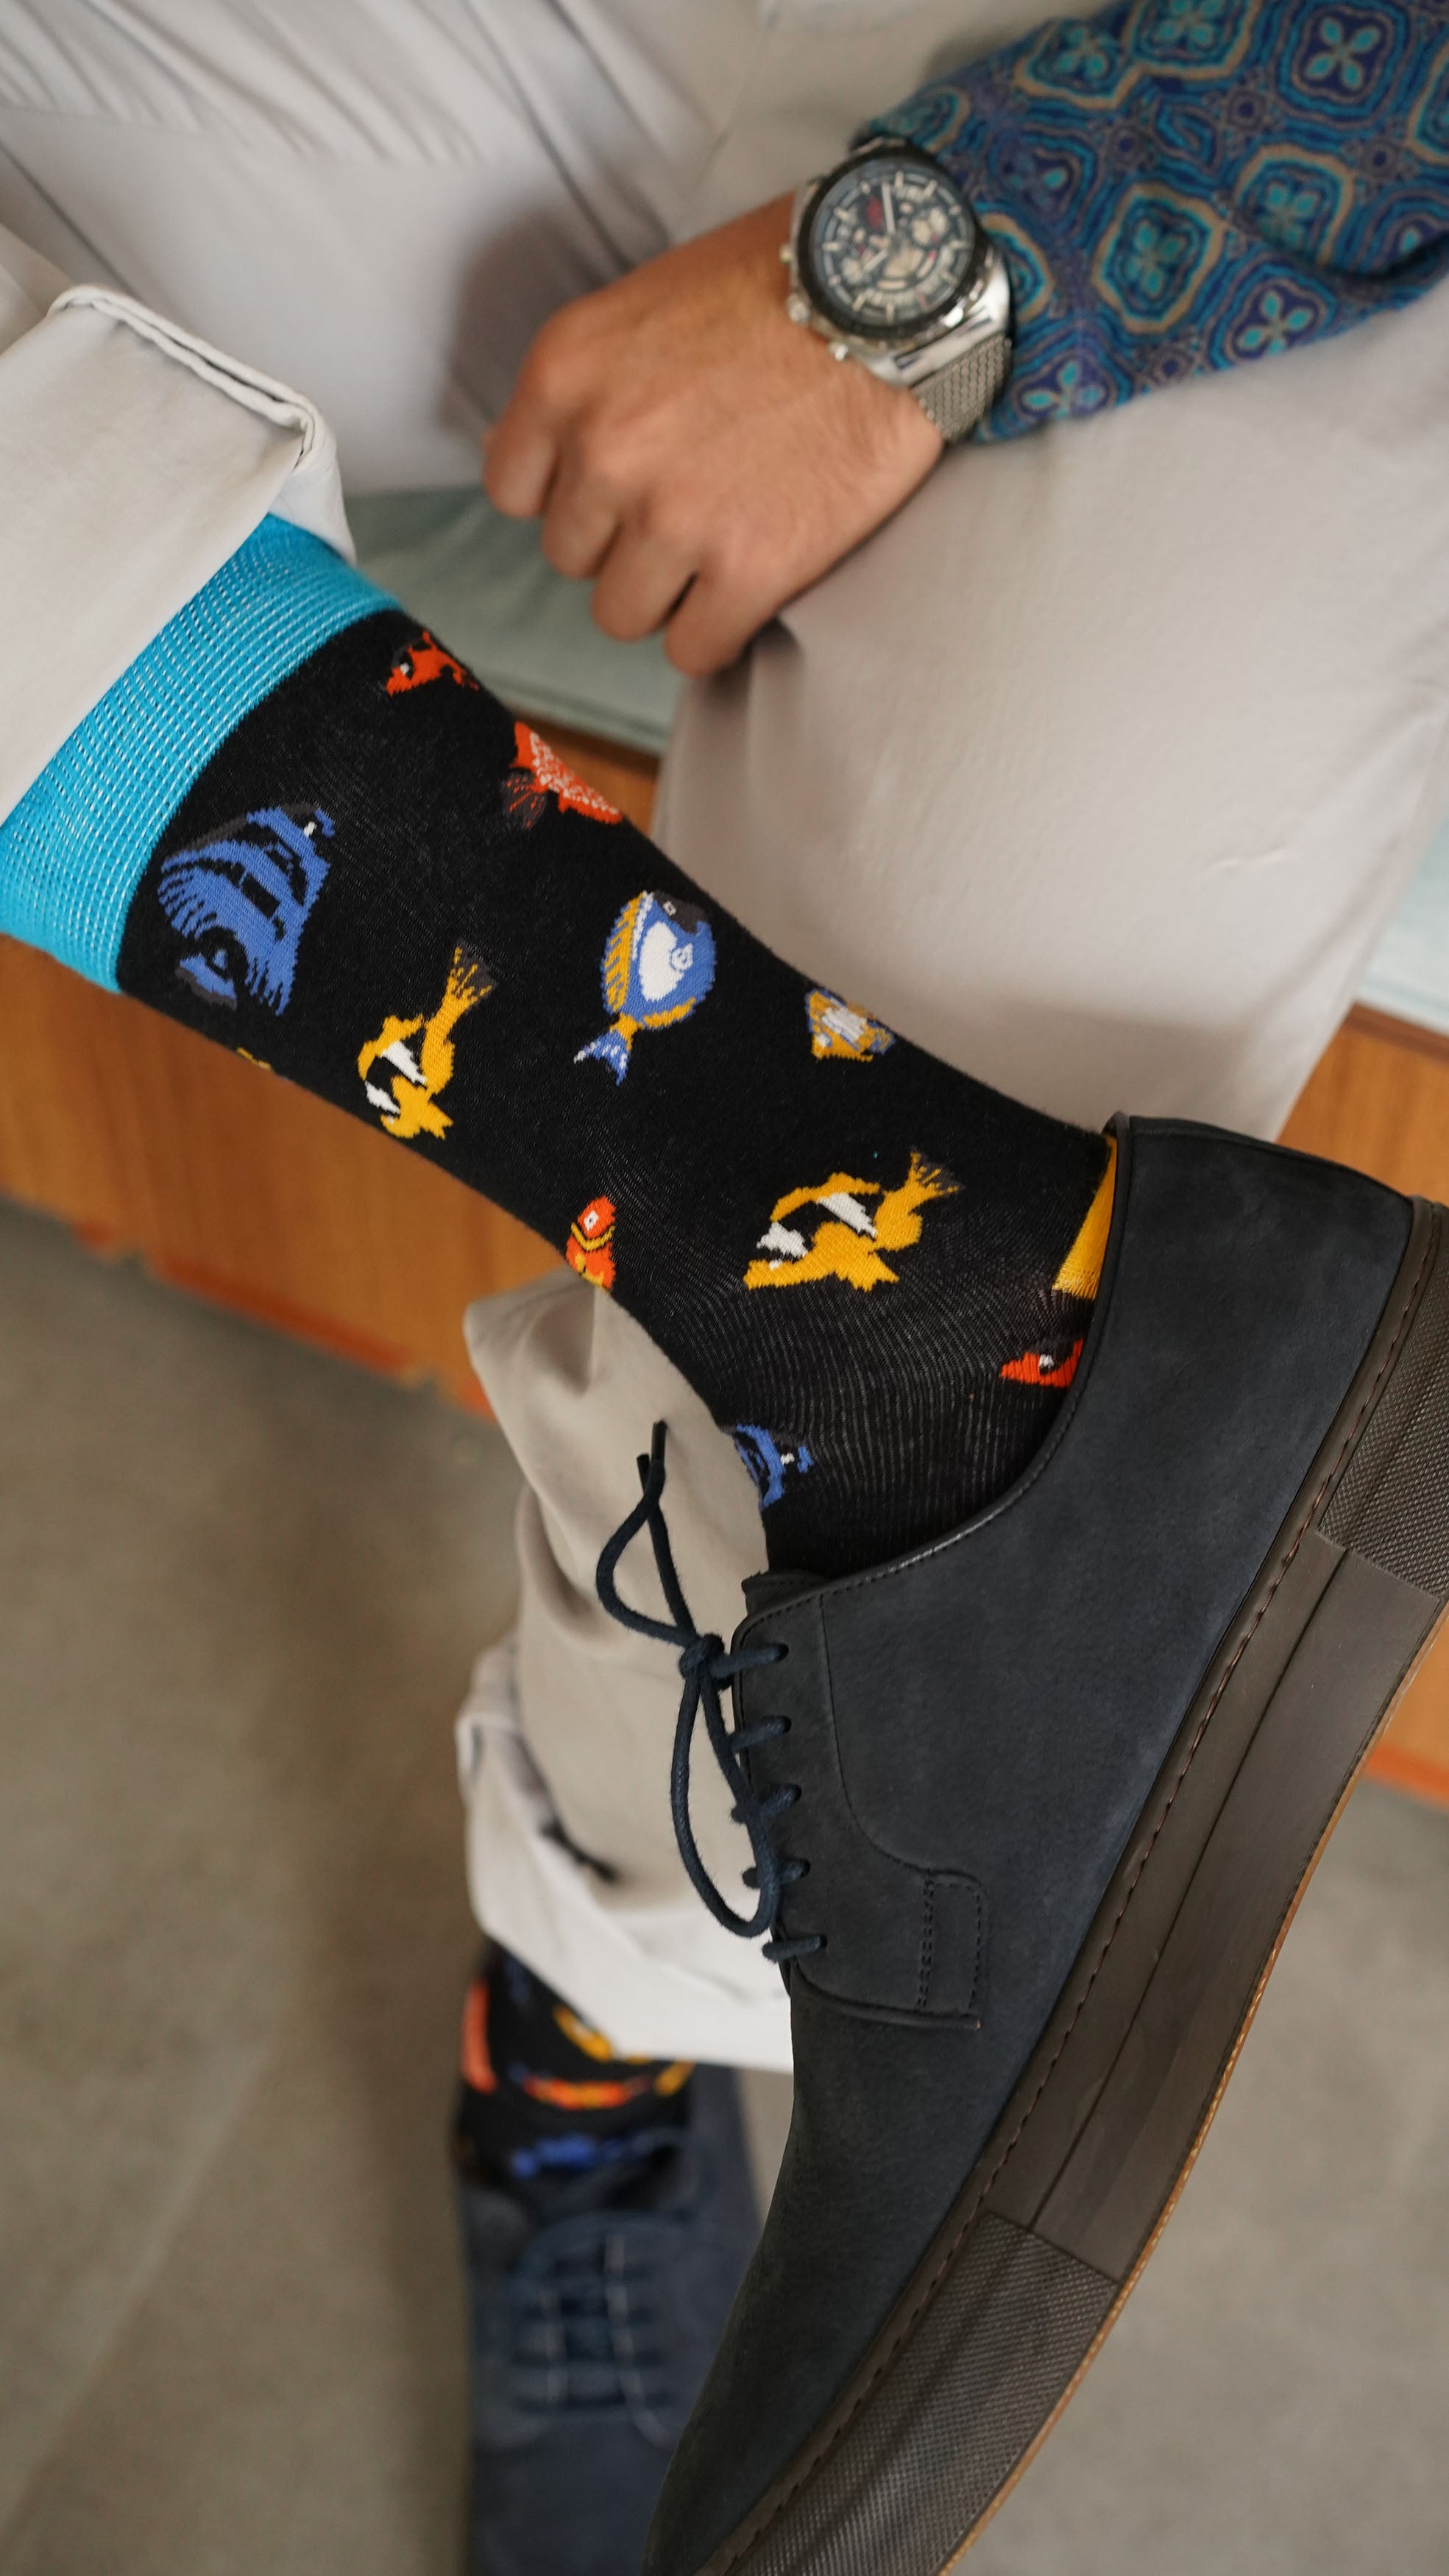 Men's Fish Socks